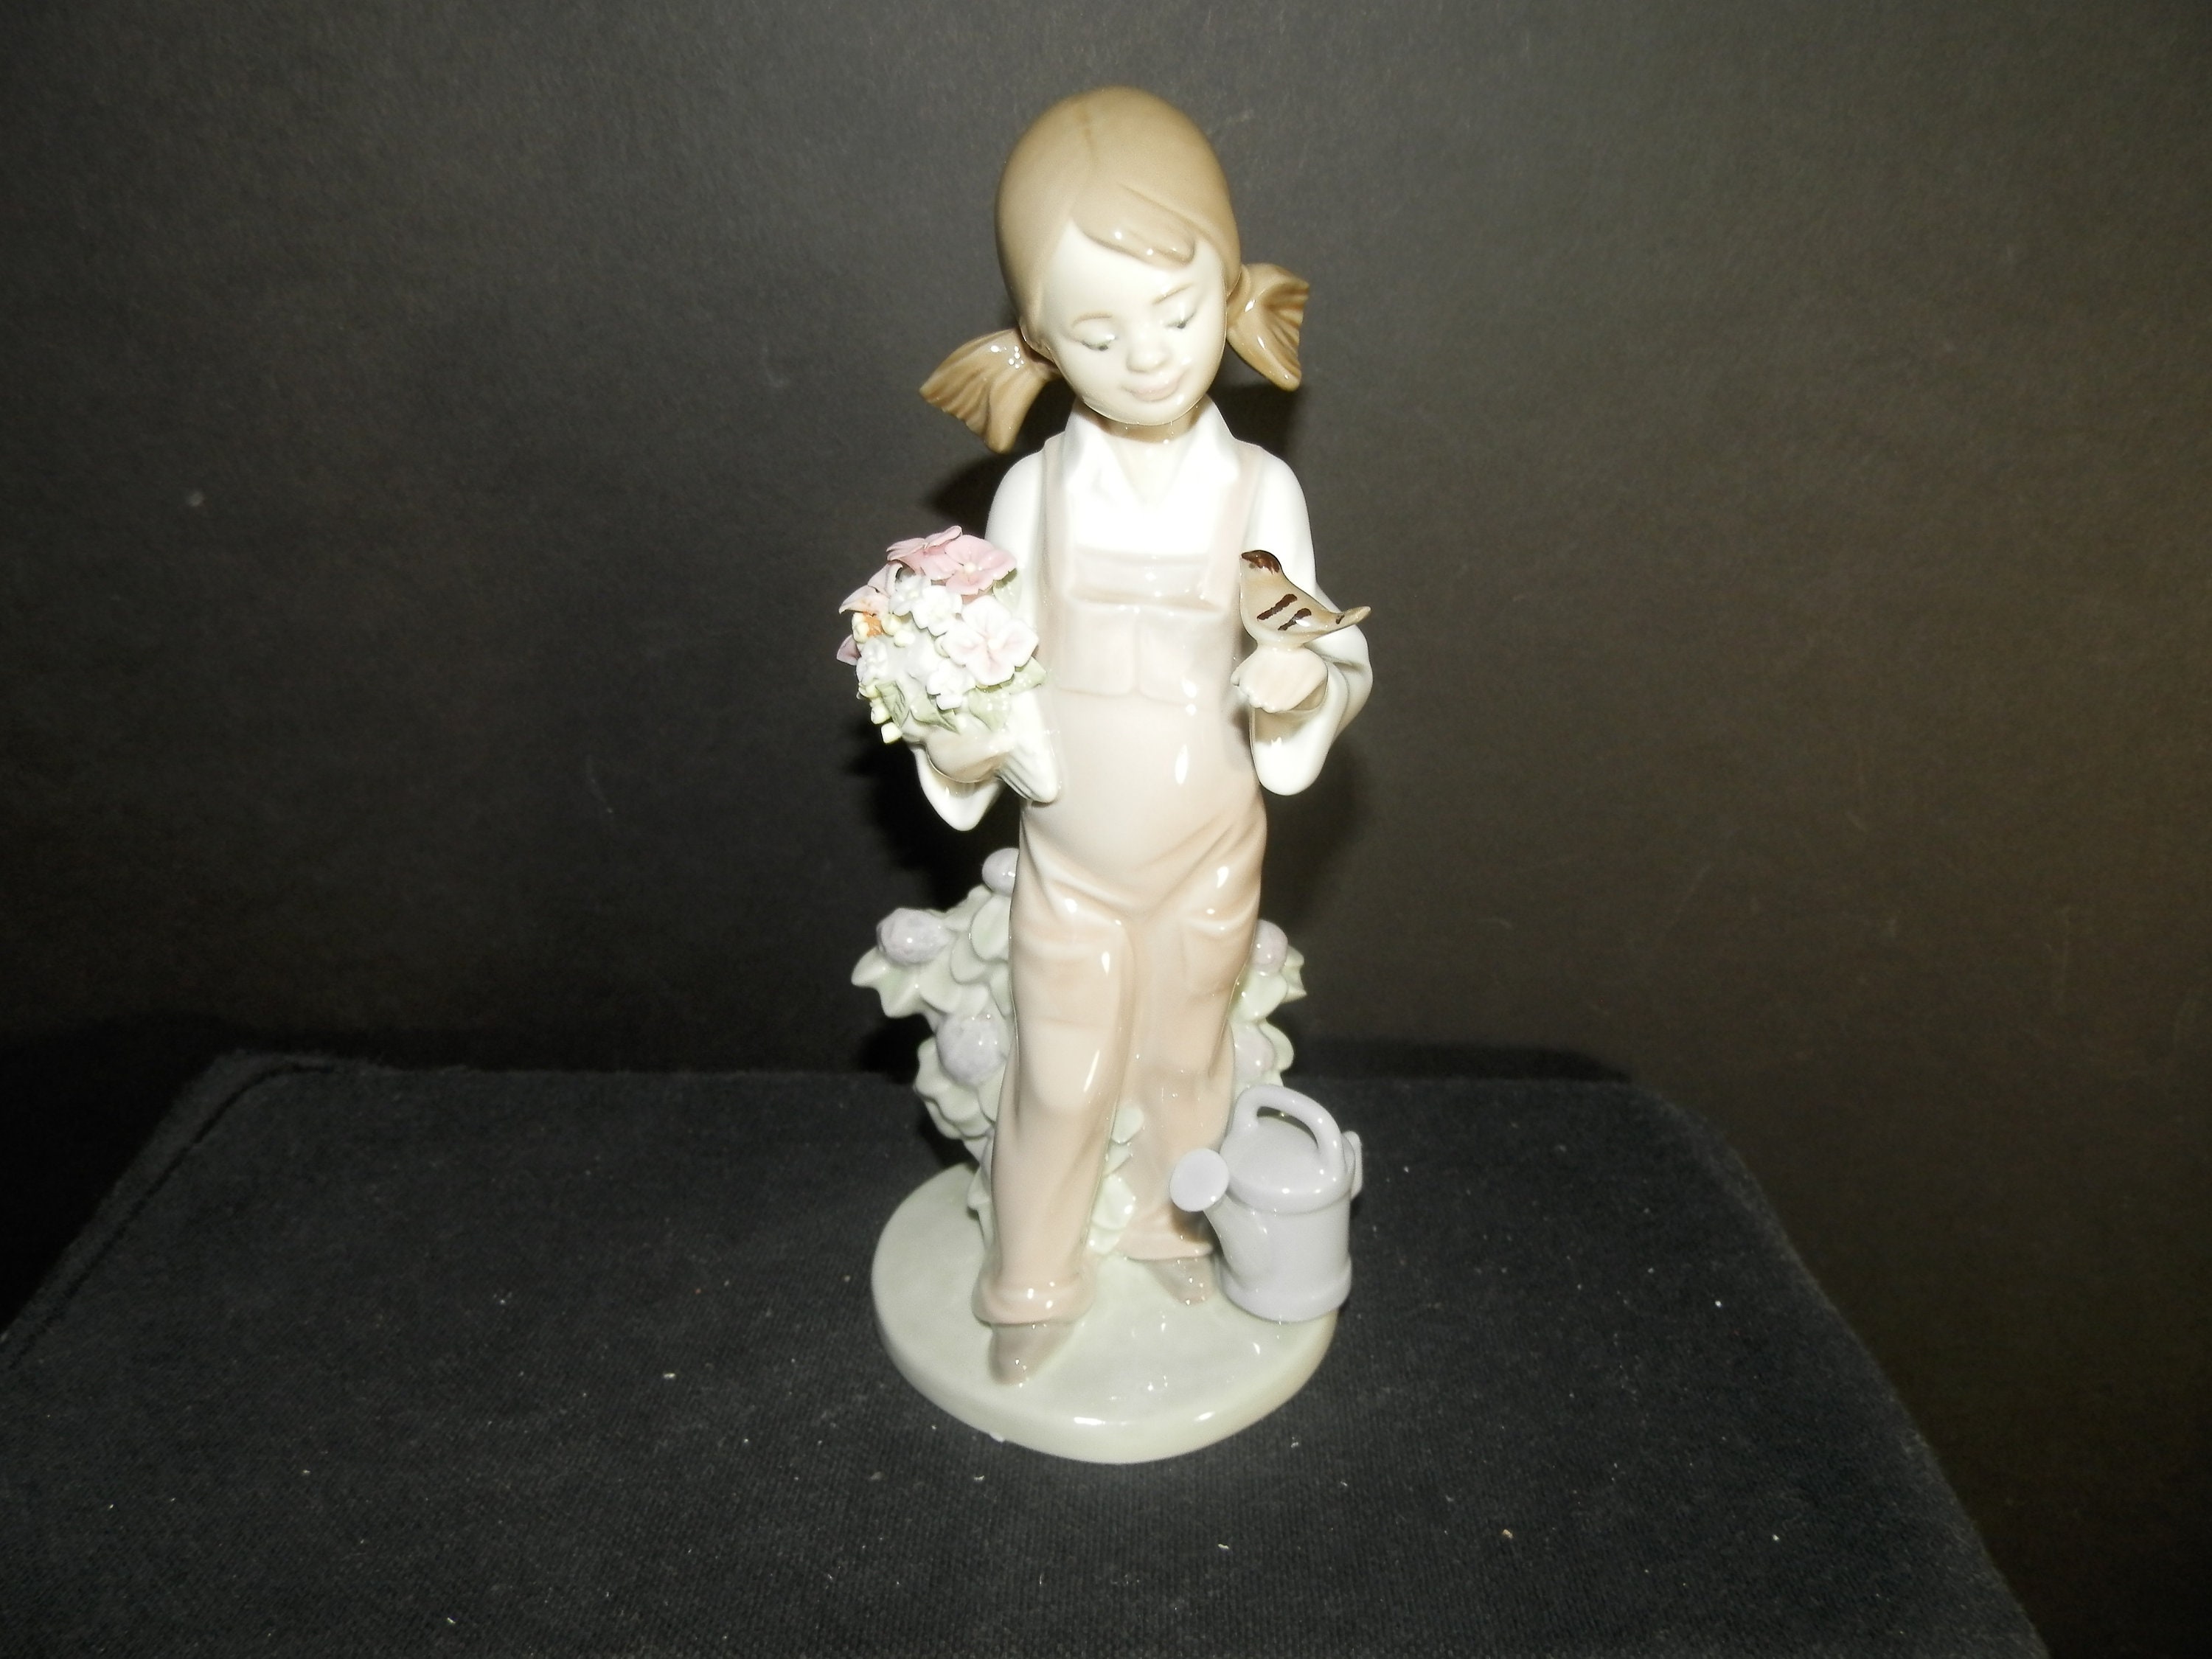 Official Lladró Porcelain Figurine Fragrant Bouquet Girl, Lladró